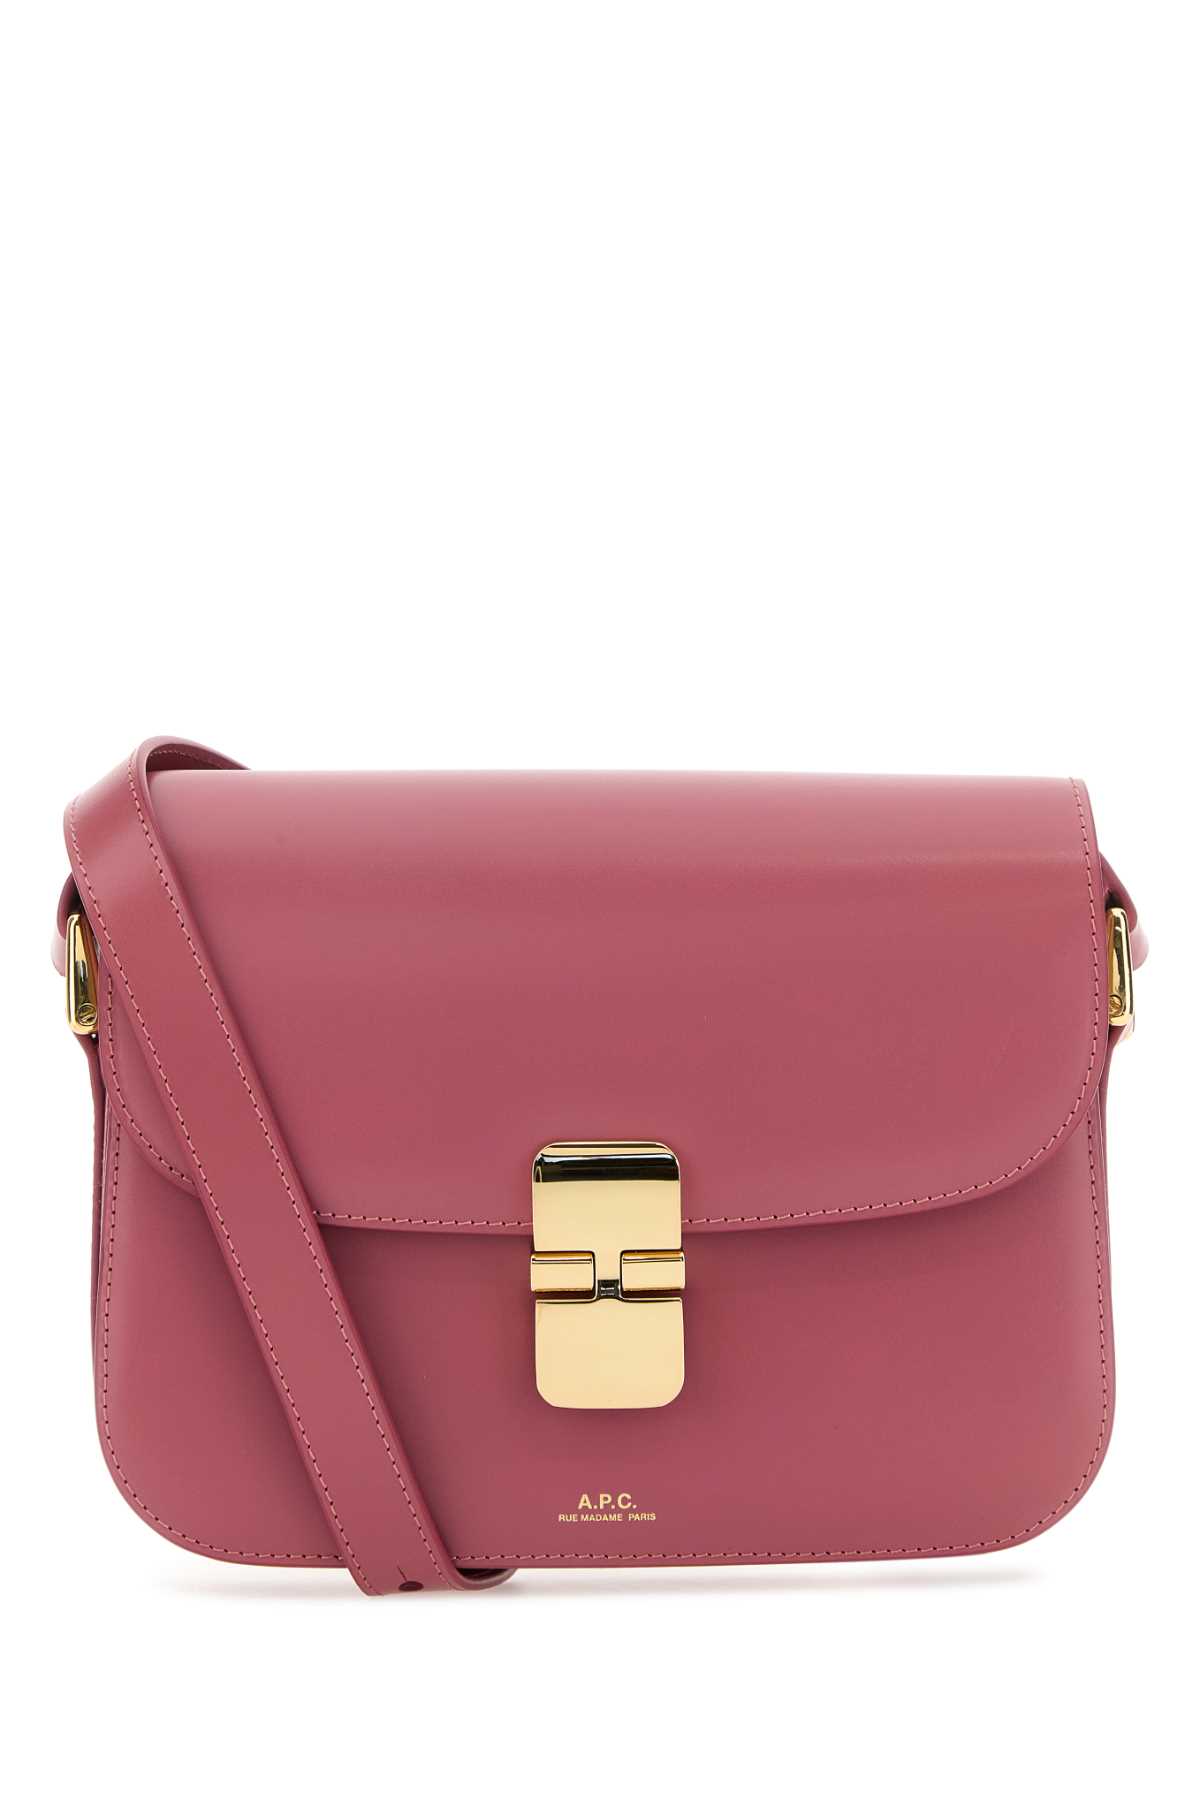 Apc Dark Pink Leather Small Grace Crossbody Bag